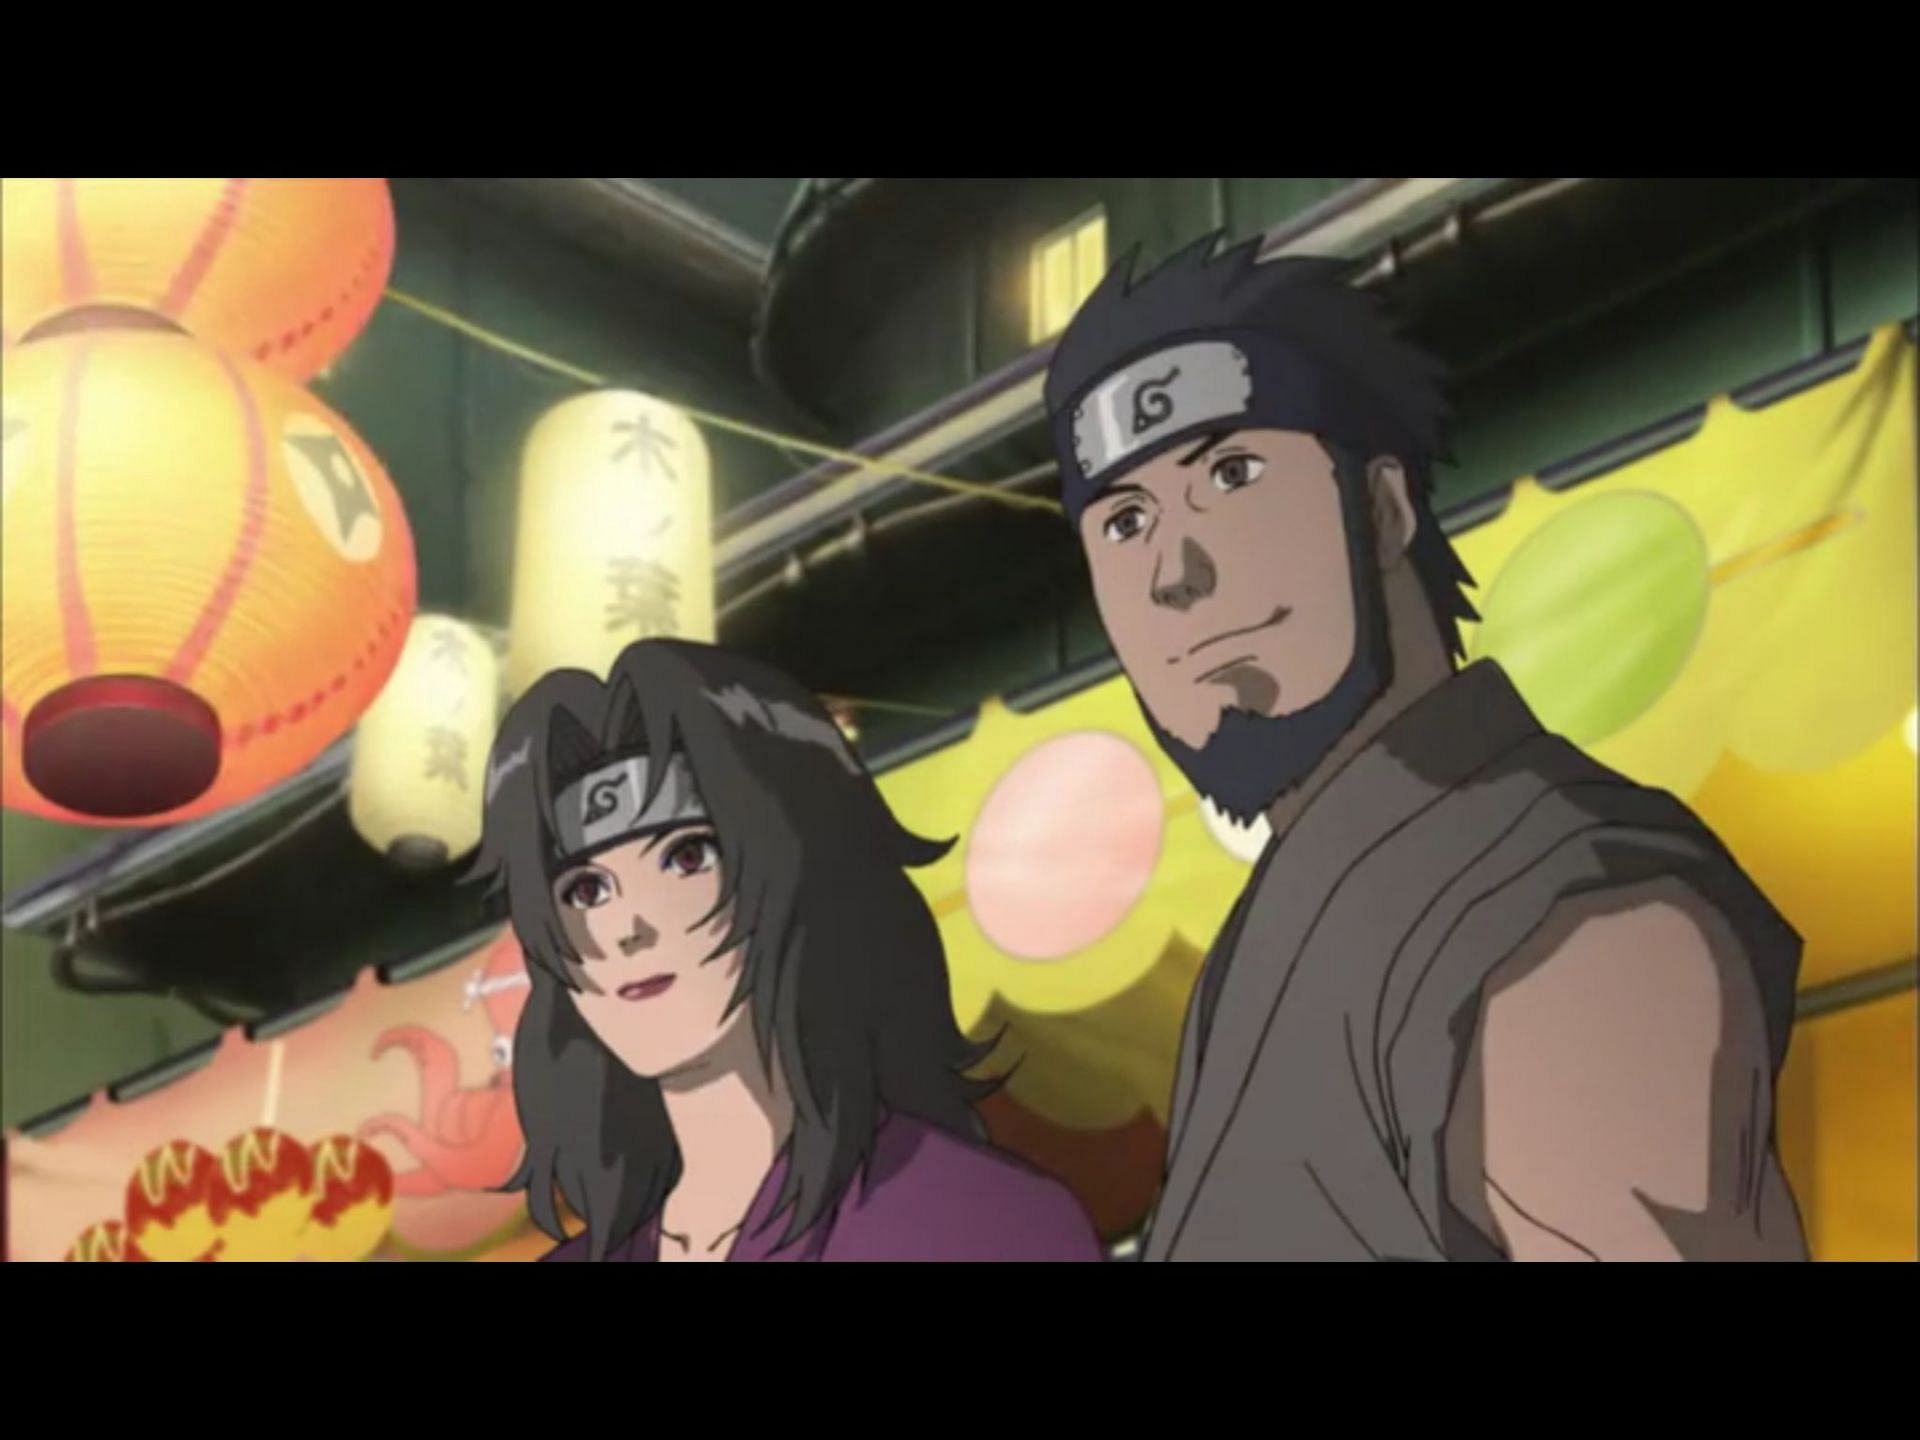 Asuma and Kurenai from the Naruto series (Image via Pinterest/alicia8896)